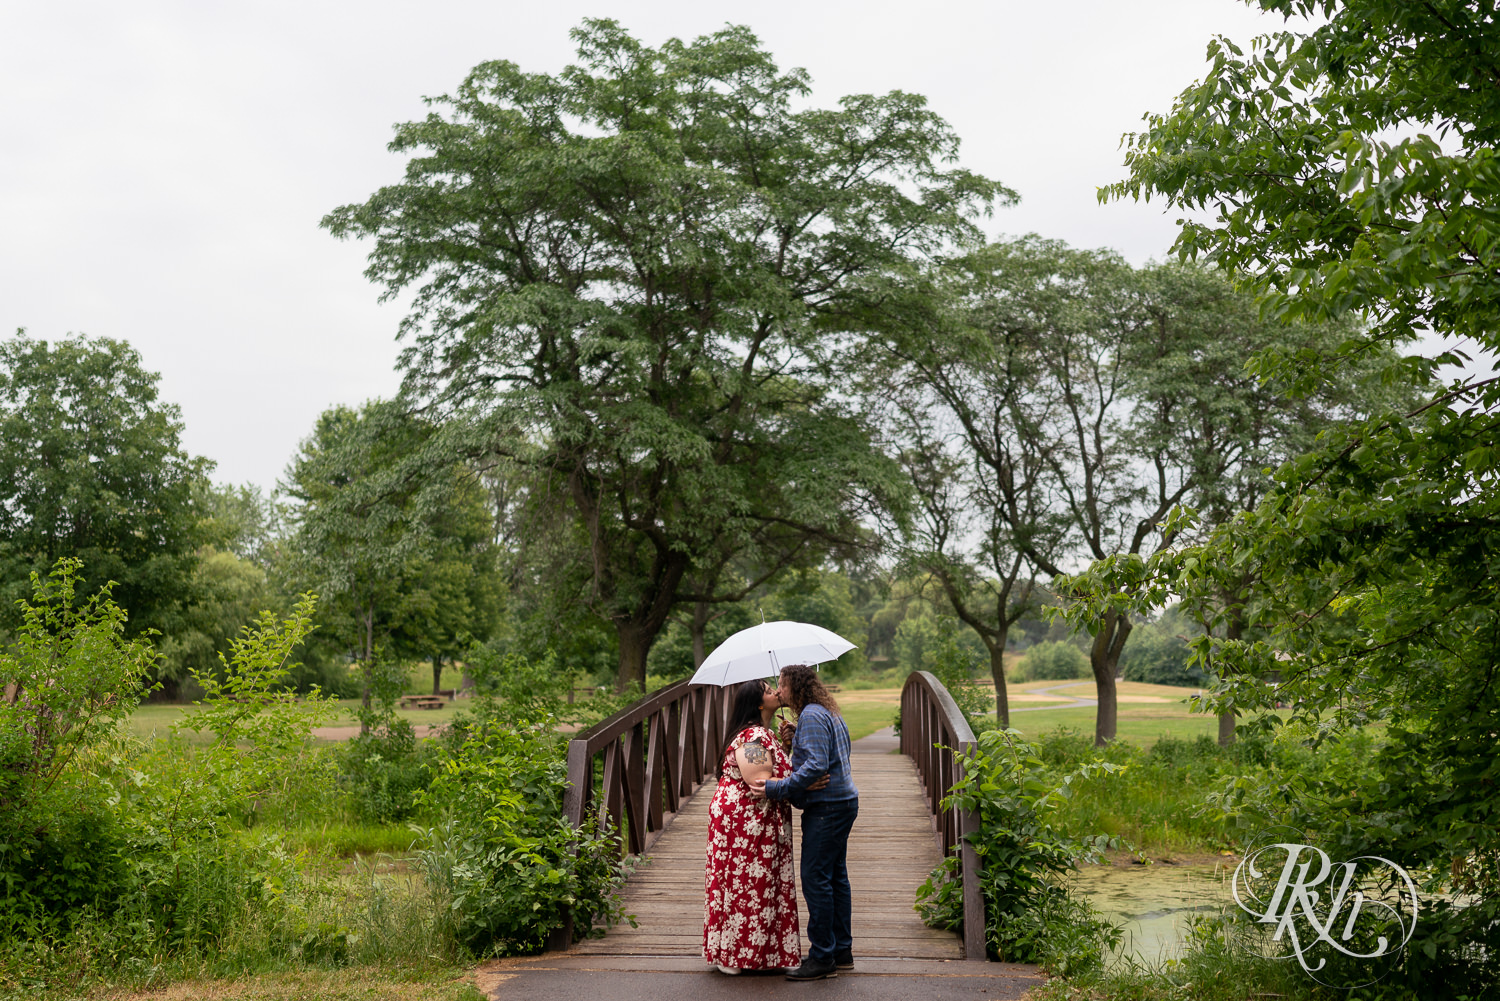 Man and woman holding umbrella in rainy Lake Phalen engagement photography